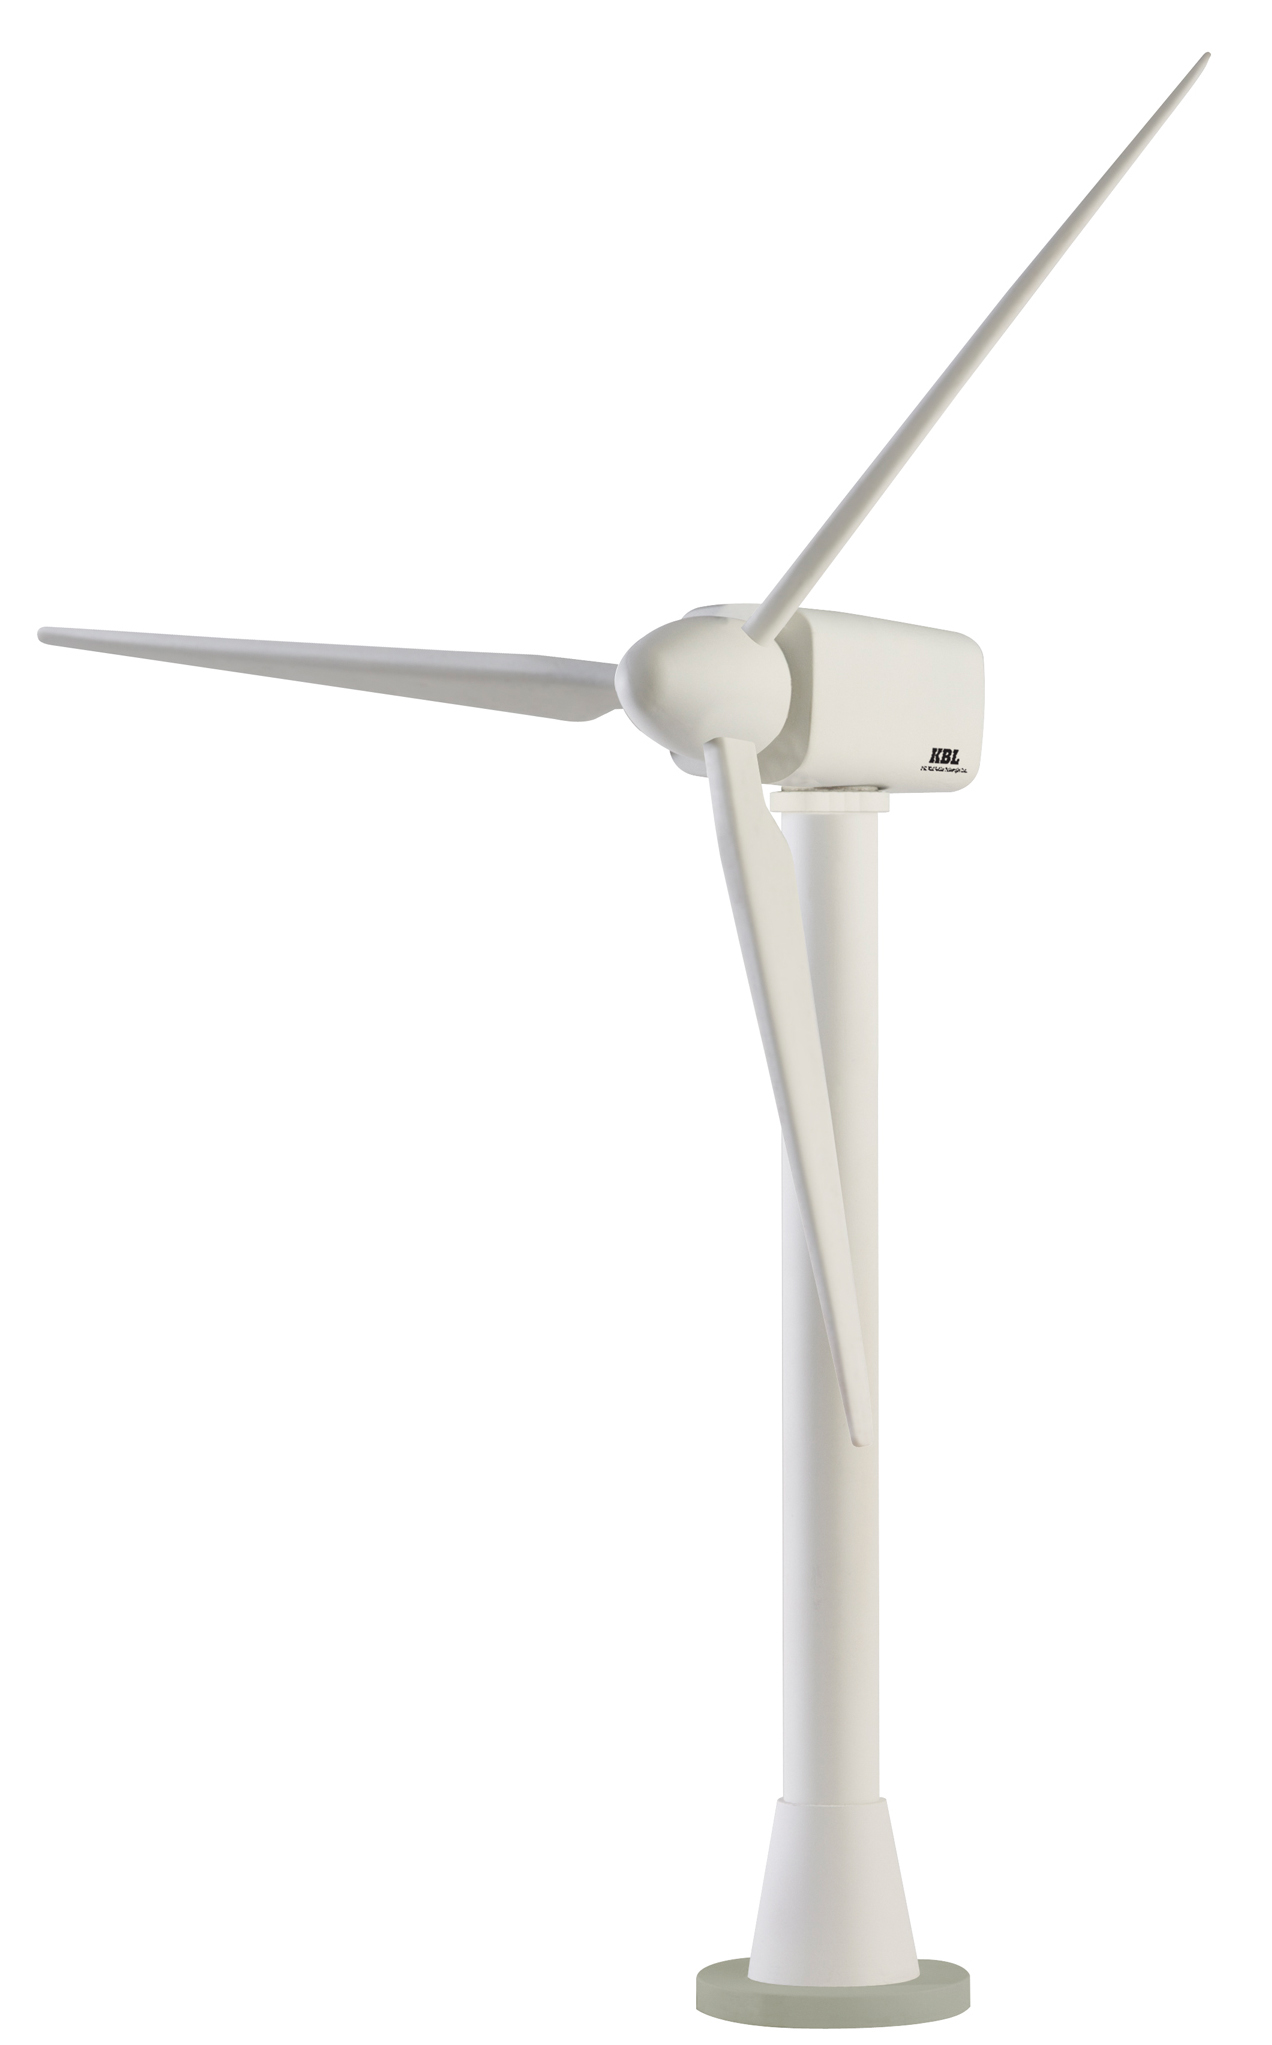 KBL Wind Turbine Technologies Corp. Operating Wind Turbine image